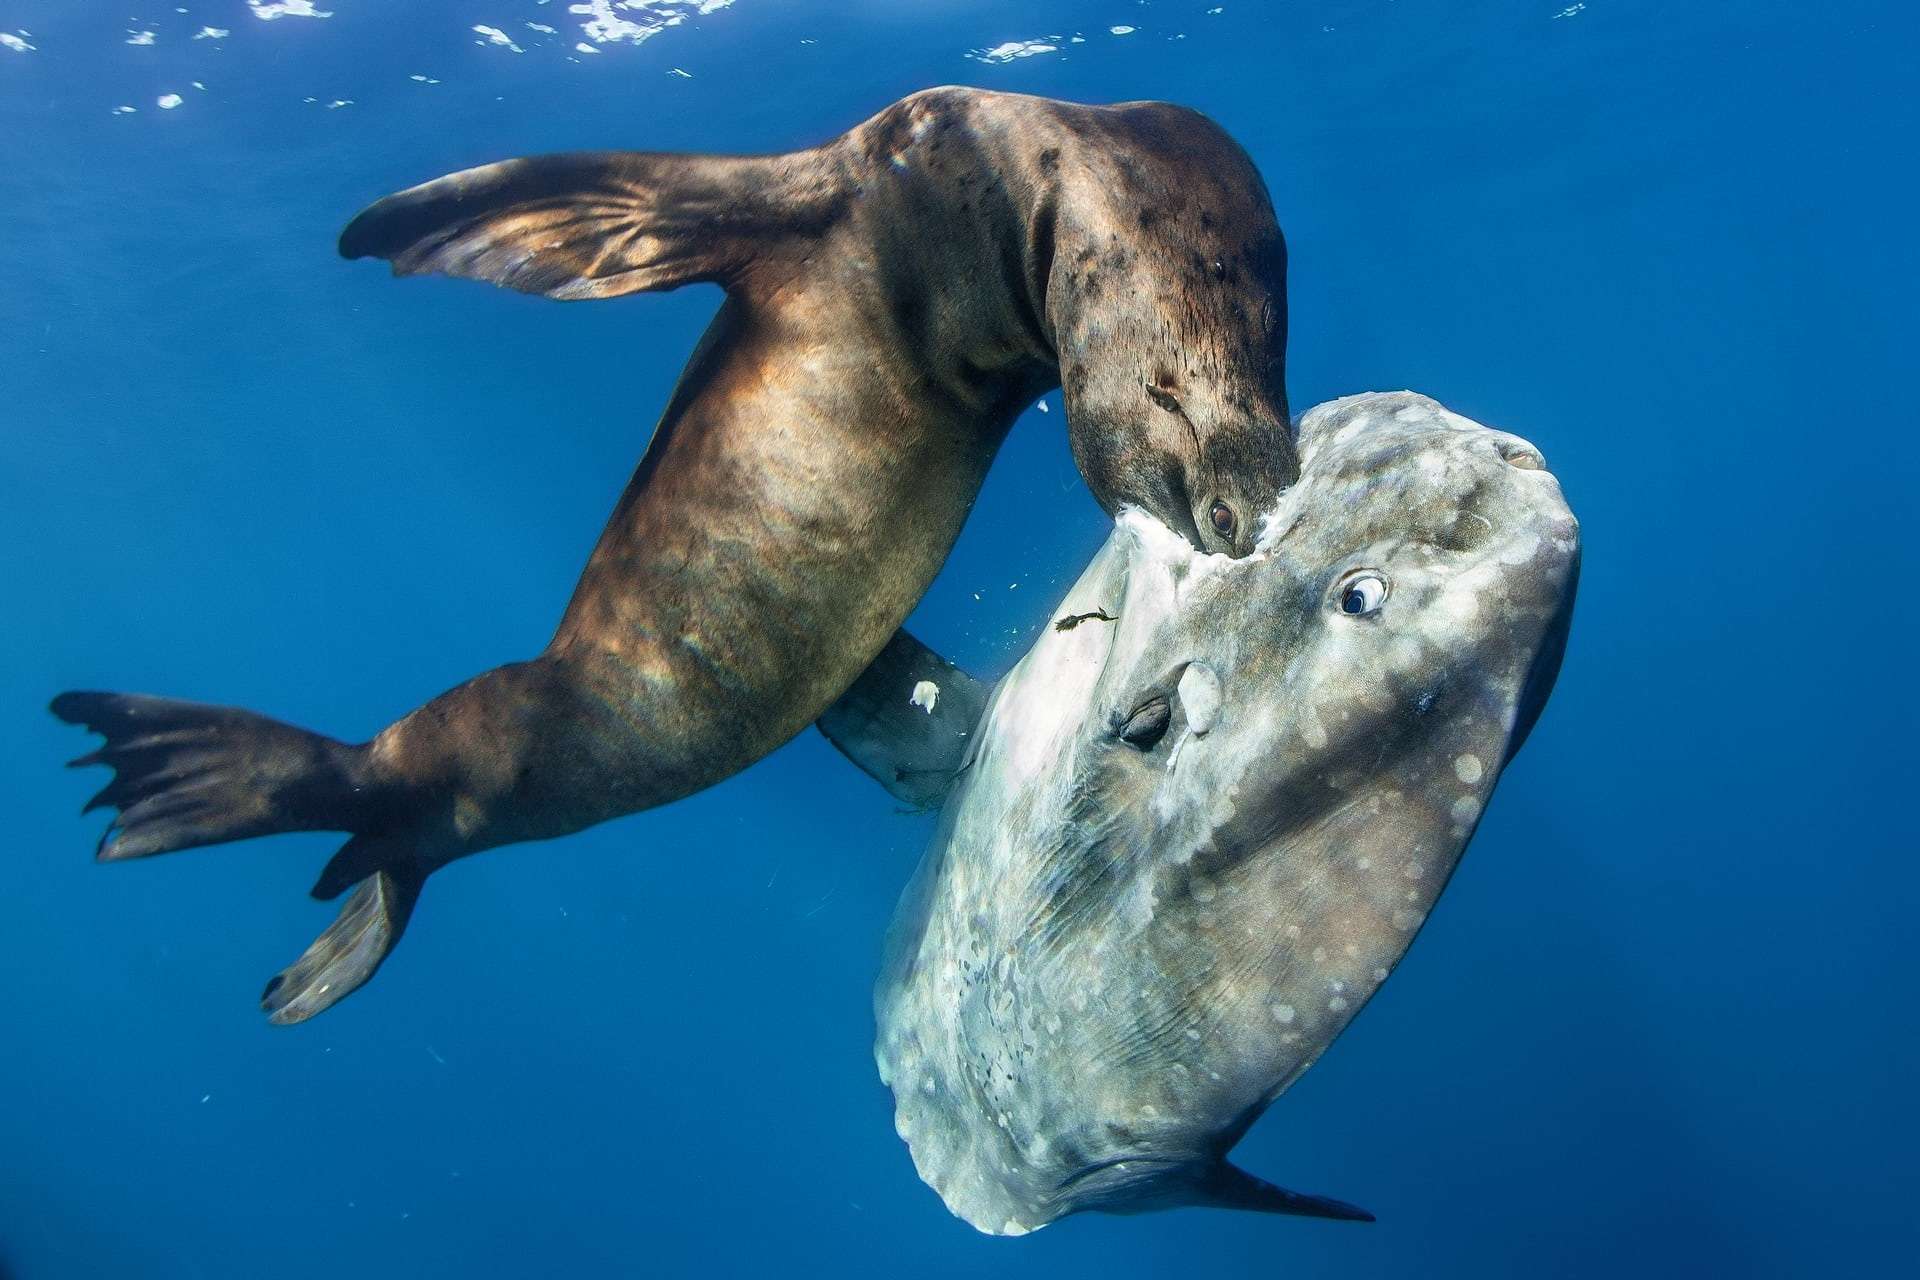 تصاویر حیات وحش اعماق اقیانوس،عکسهای حیوانات اعماق اقیانوس,عکس های حیات وحش زیر آب